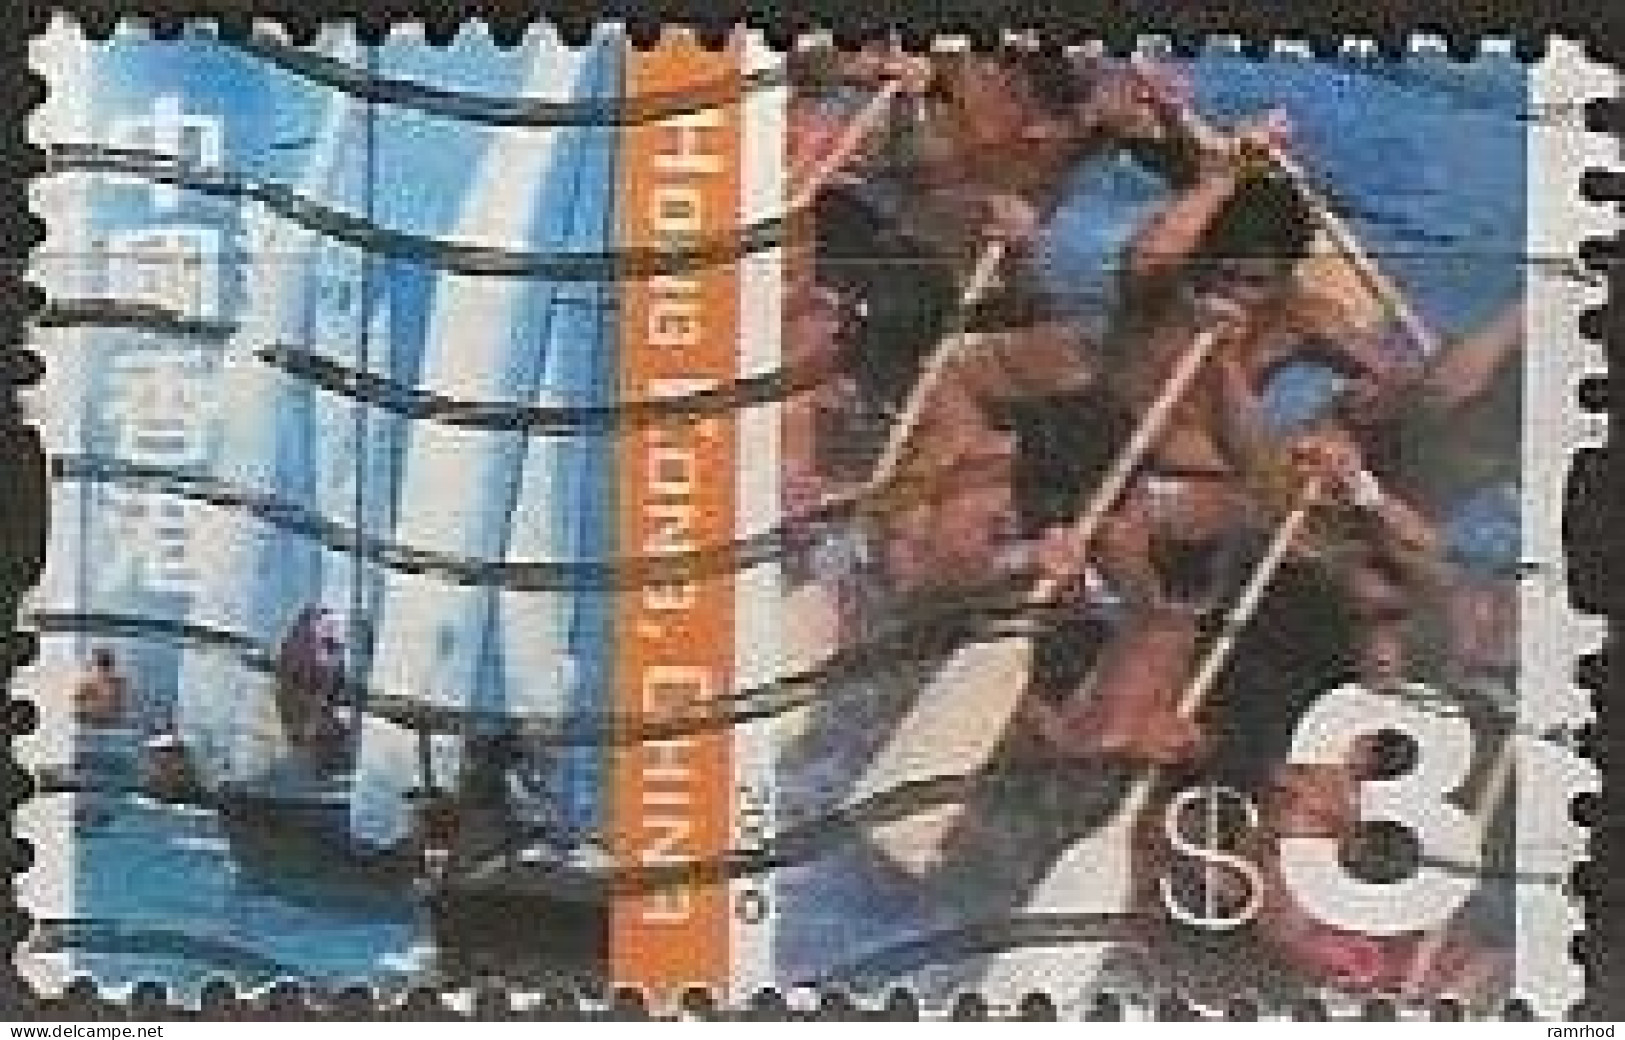 HONG KONG 2002 Cultural Diversity -  $3 - Yachts And Dragon Boat FU - Oblitérés